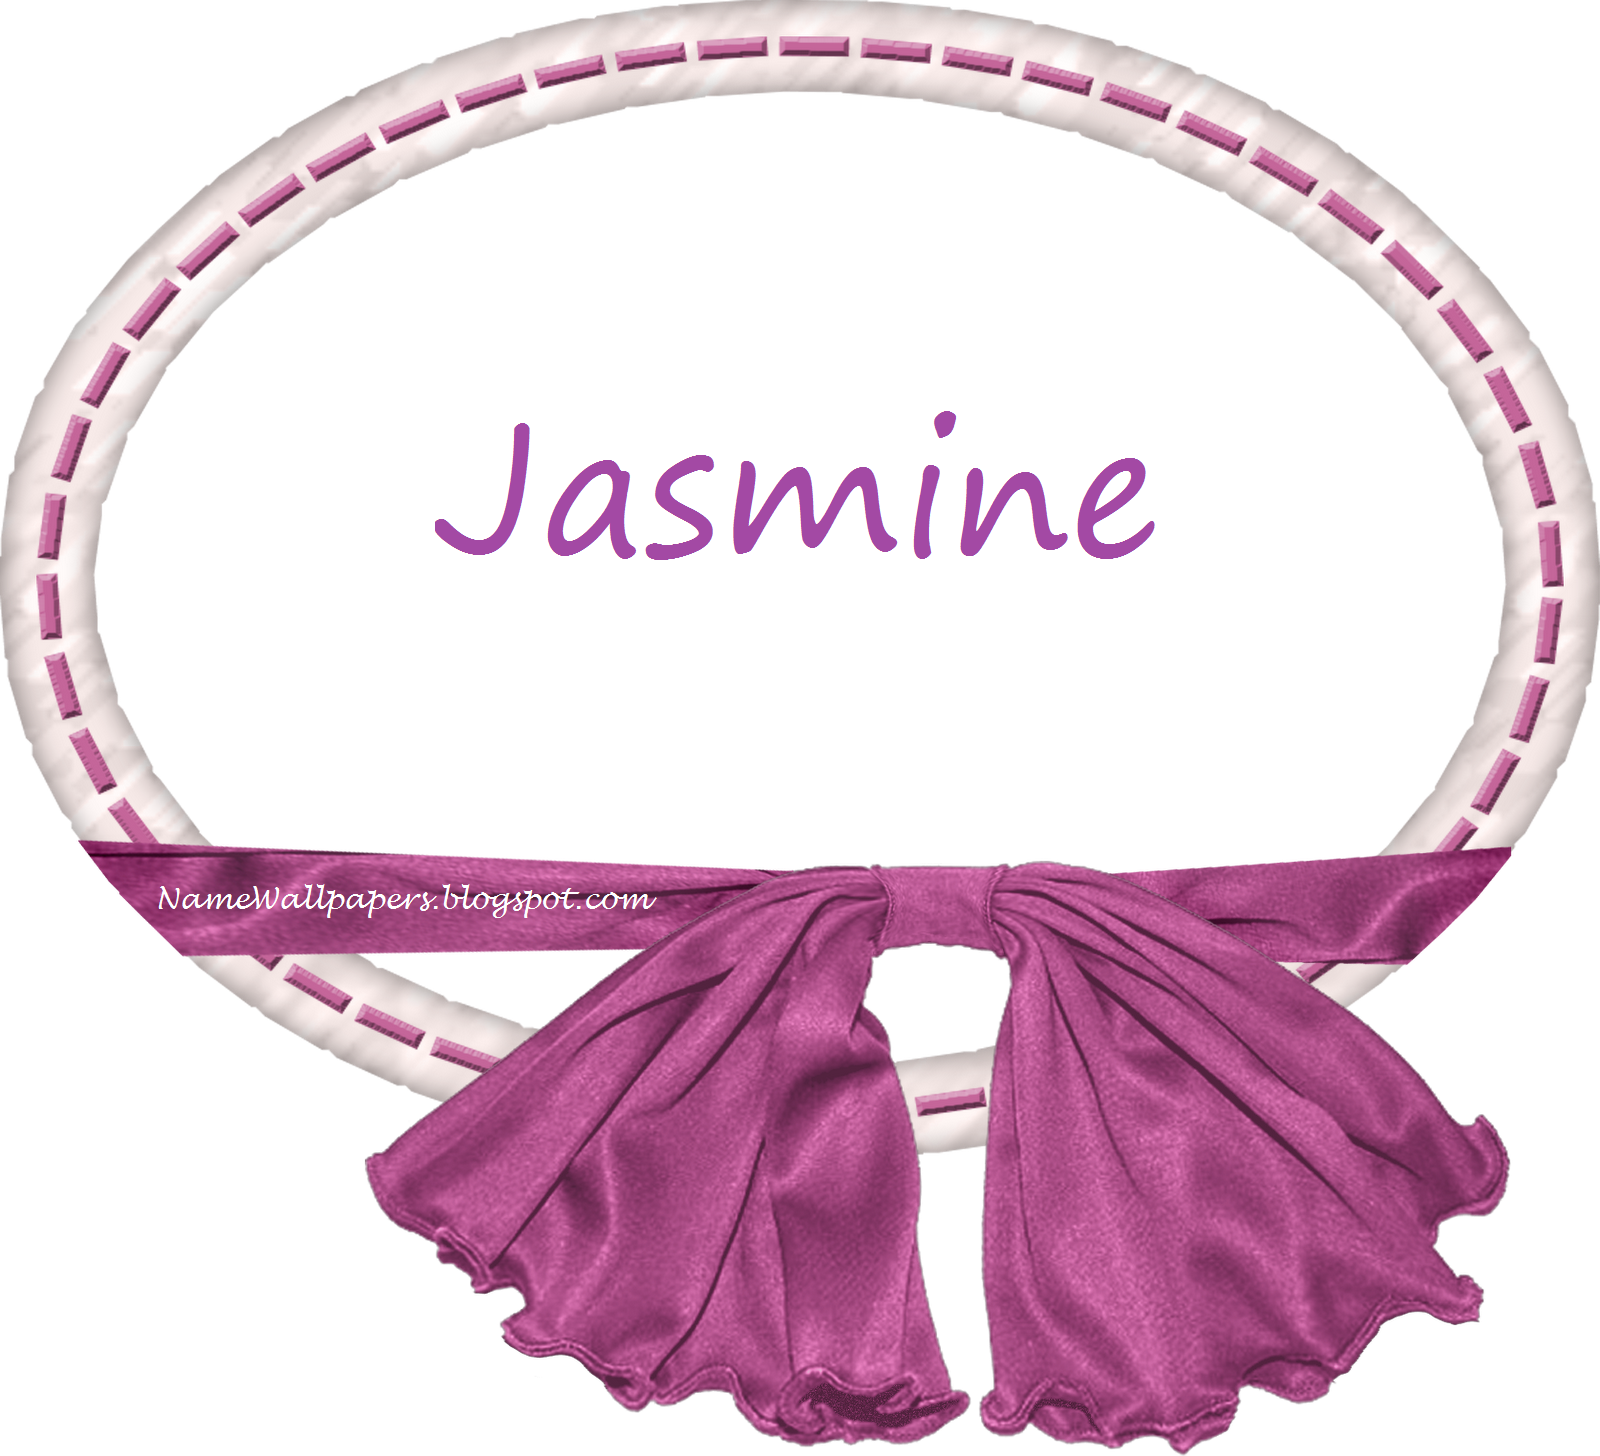 Find more Jasmine Name Wallpapers Jasmine Name Wallpaper Urdu Name Me...